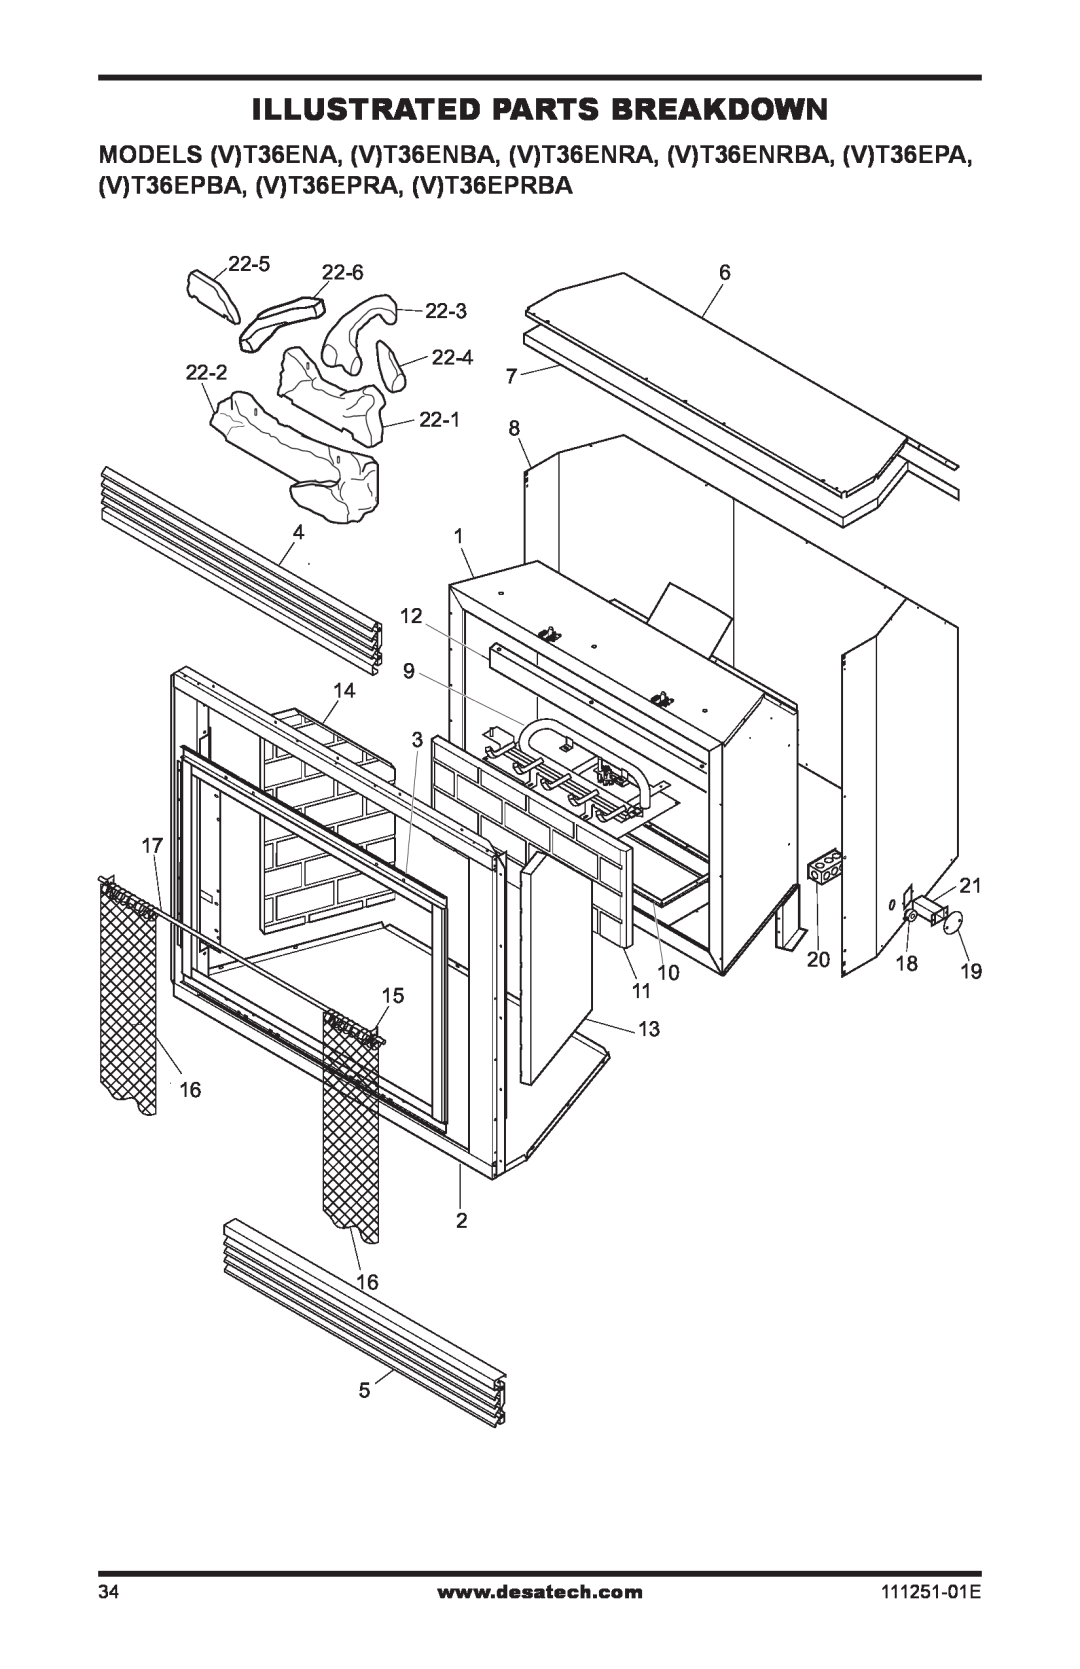 Desa (V)T36EPA installation manual Illustrated Parts Breakdown, 22-2, 111251-01E 